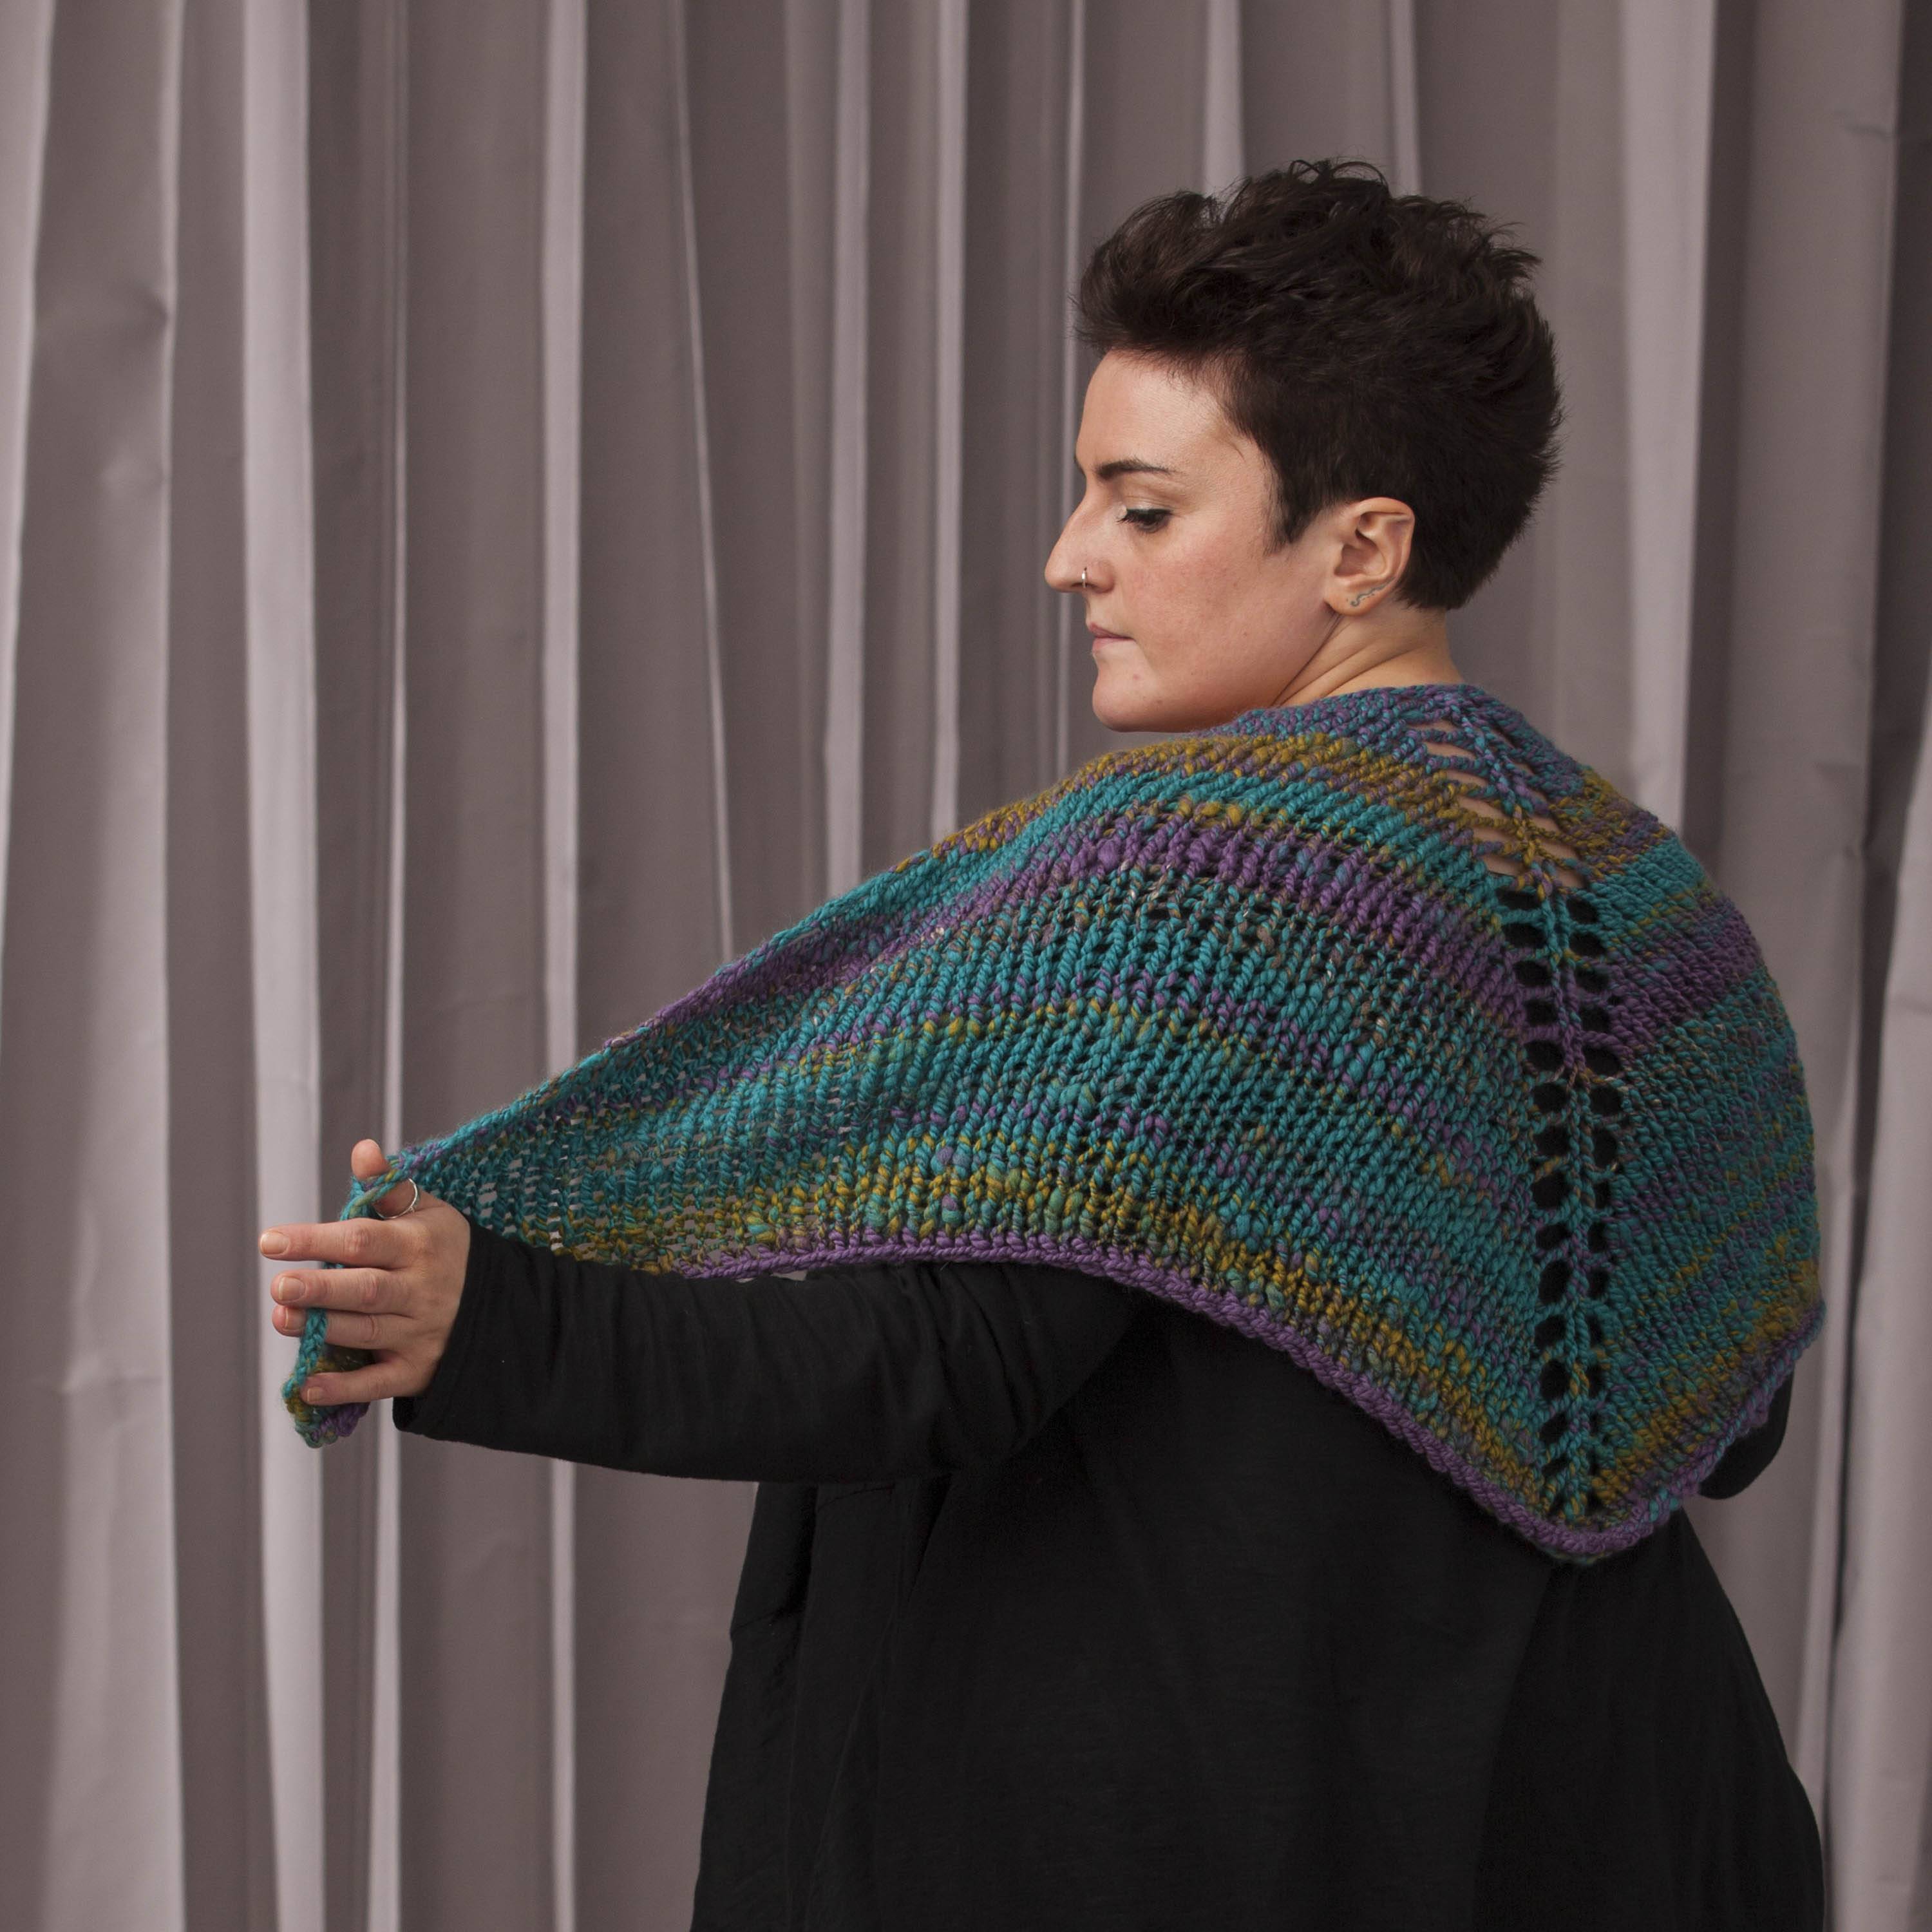 A woman wears a simple, handknit shawl made from handspun, multicoloured yarn